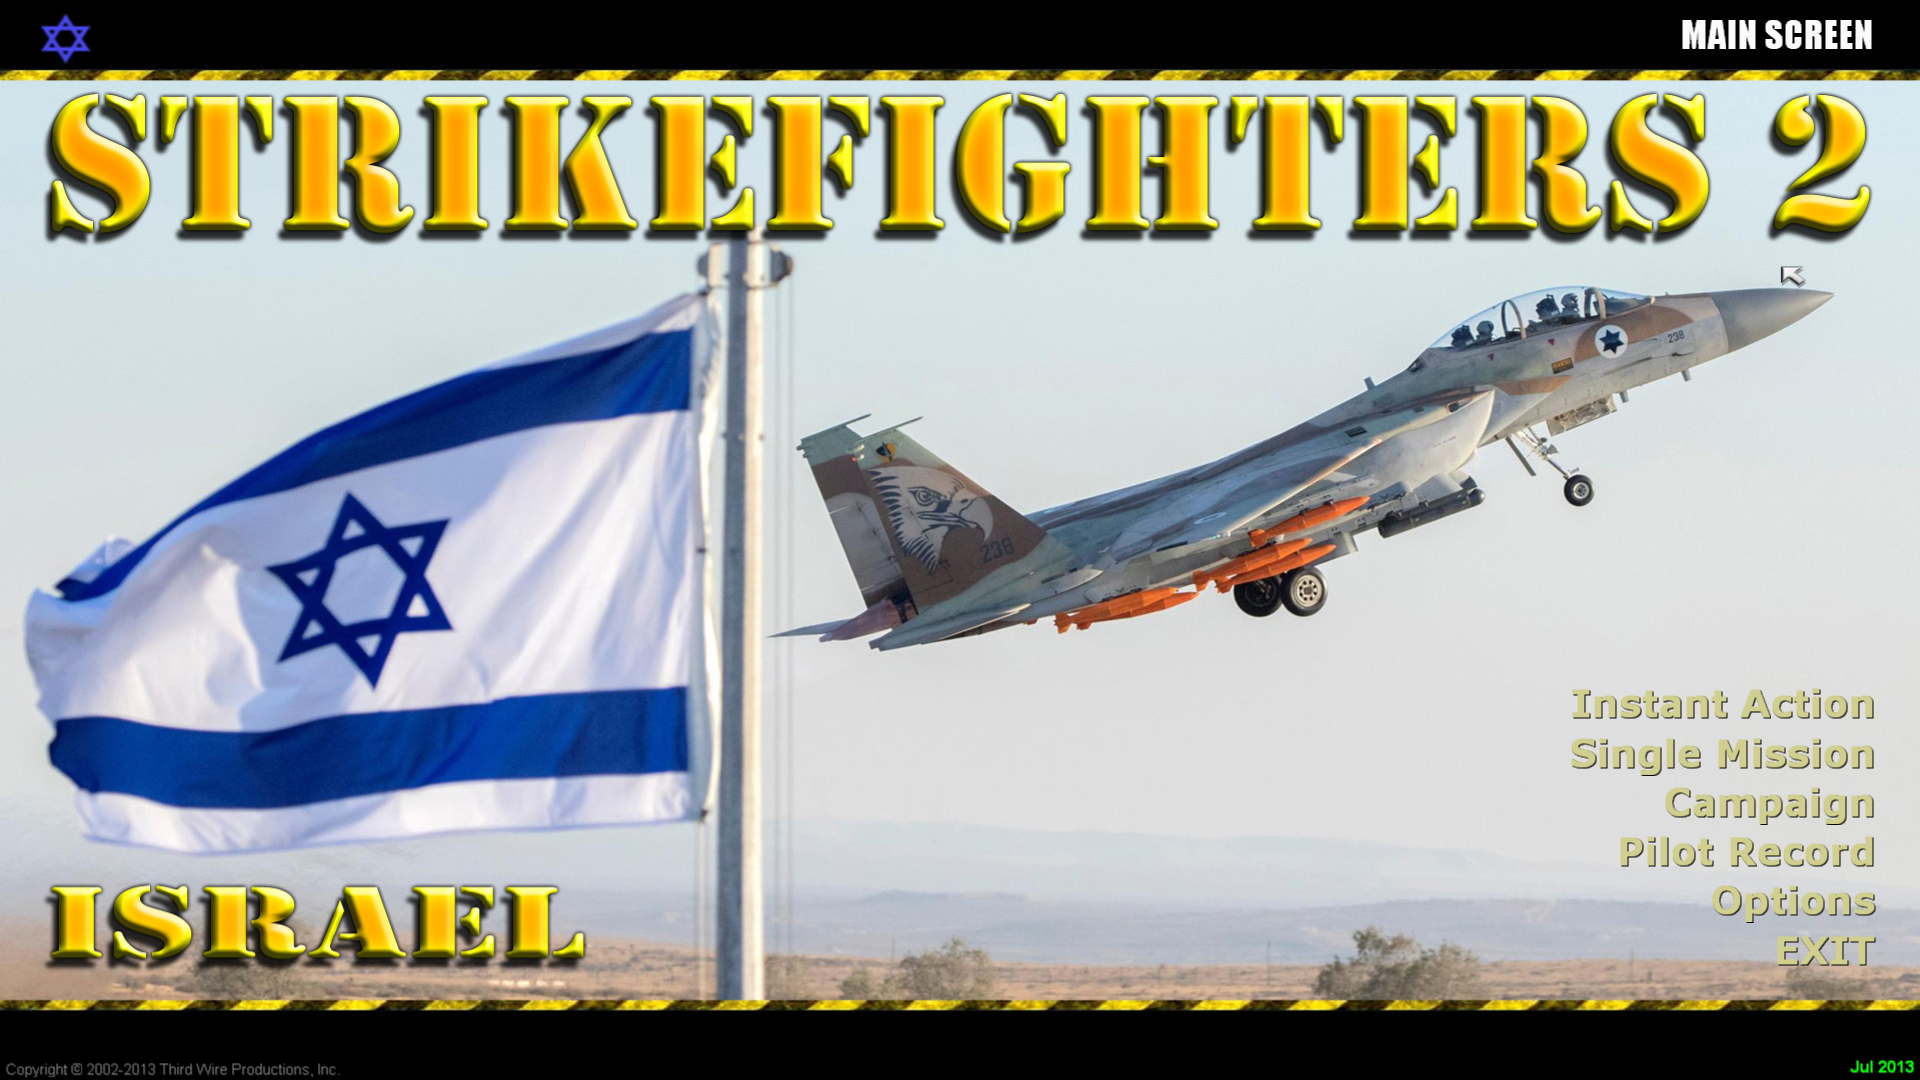 Strikefighters2 Israel Hi-Res 1920x1080 Menu Screens and Music!